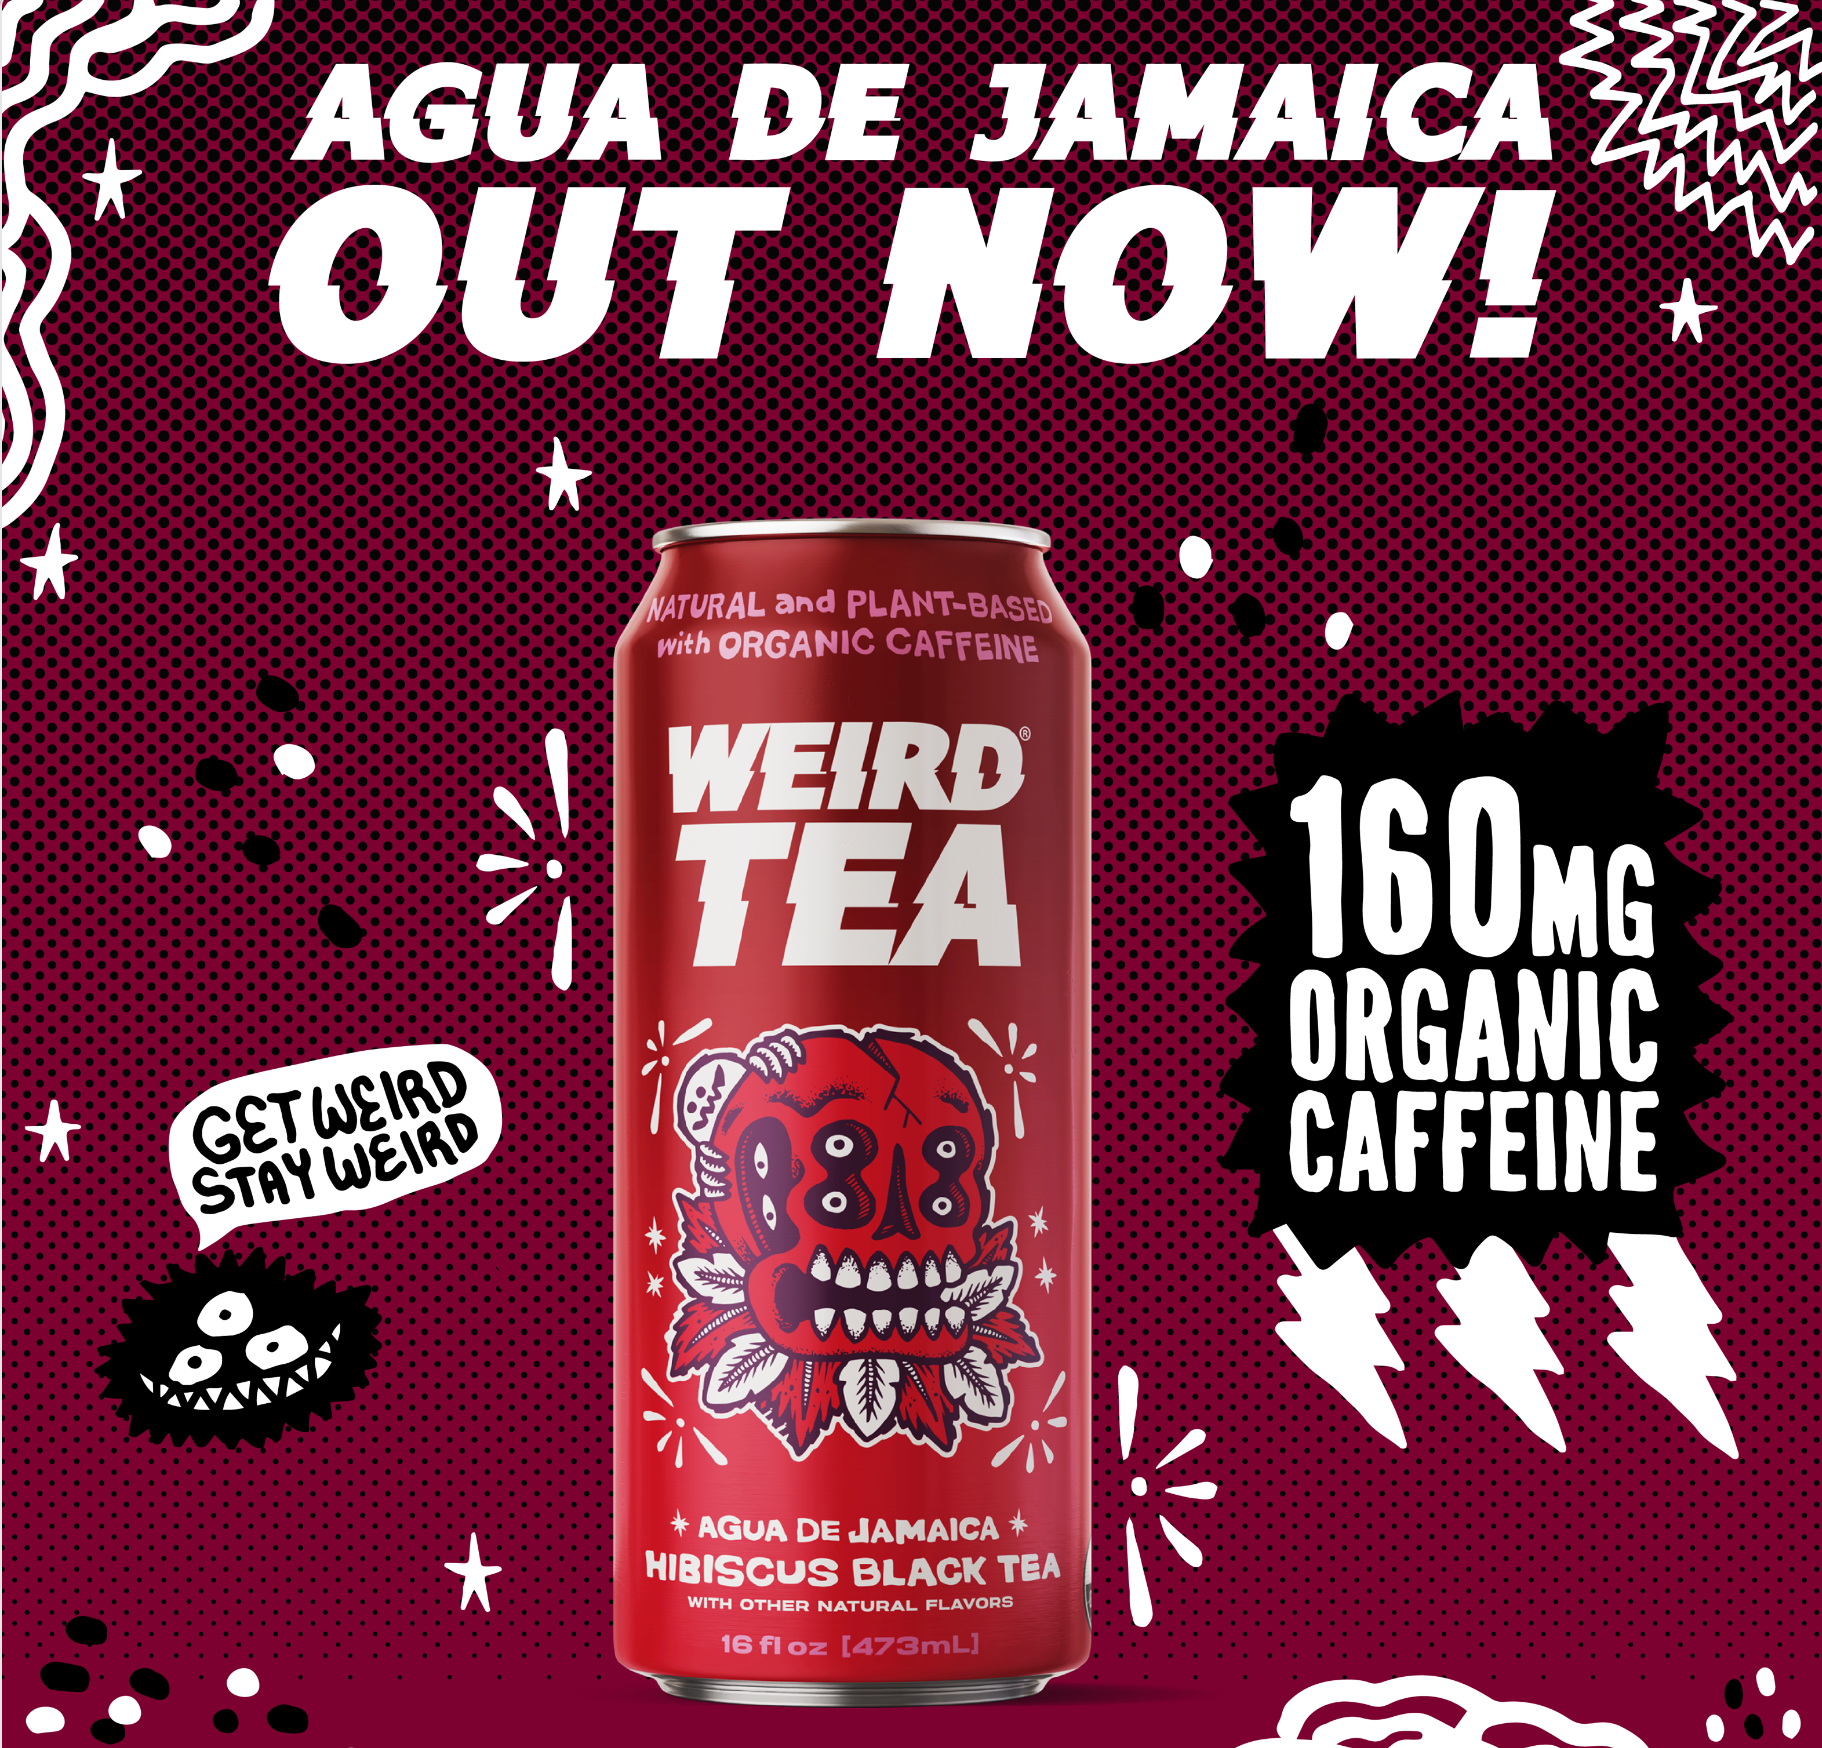 Agua de Jamaica Hibiscus black tea Drink Weird